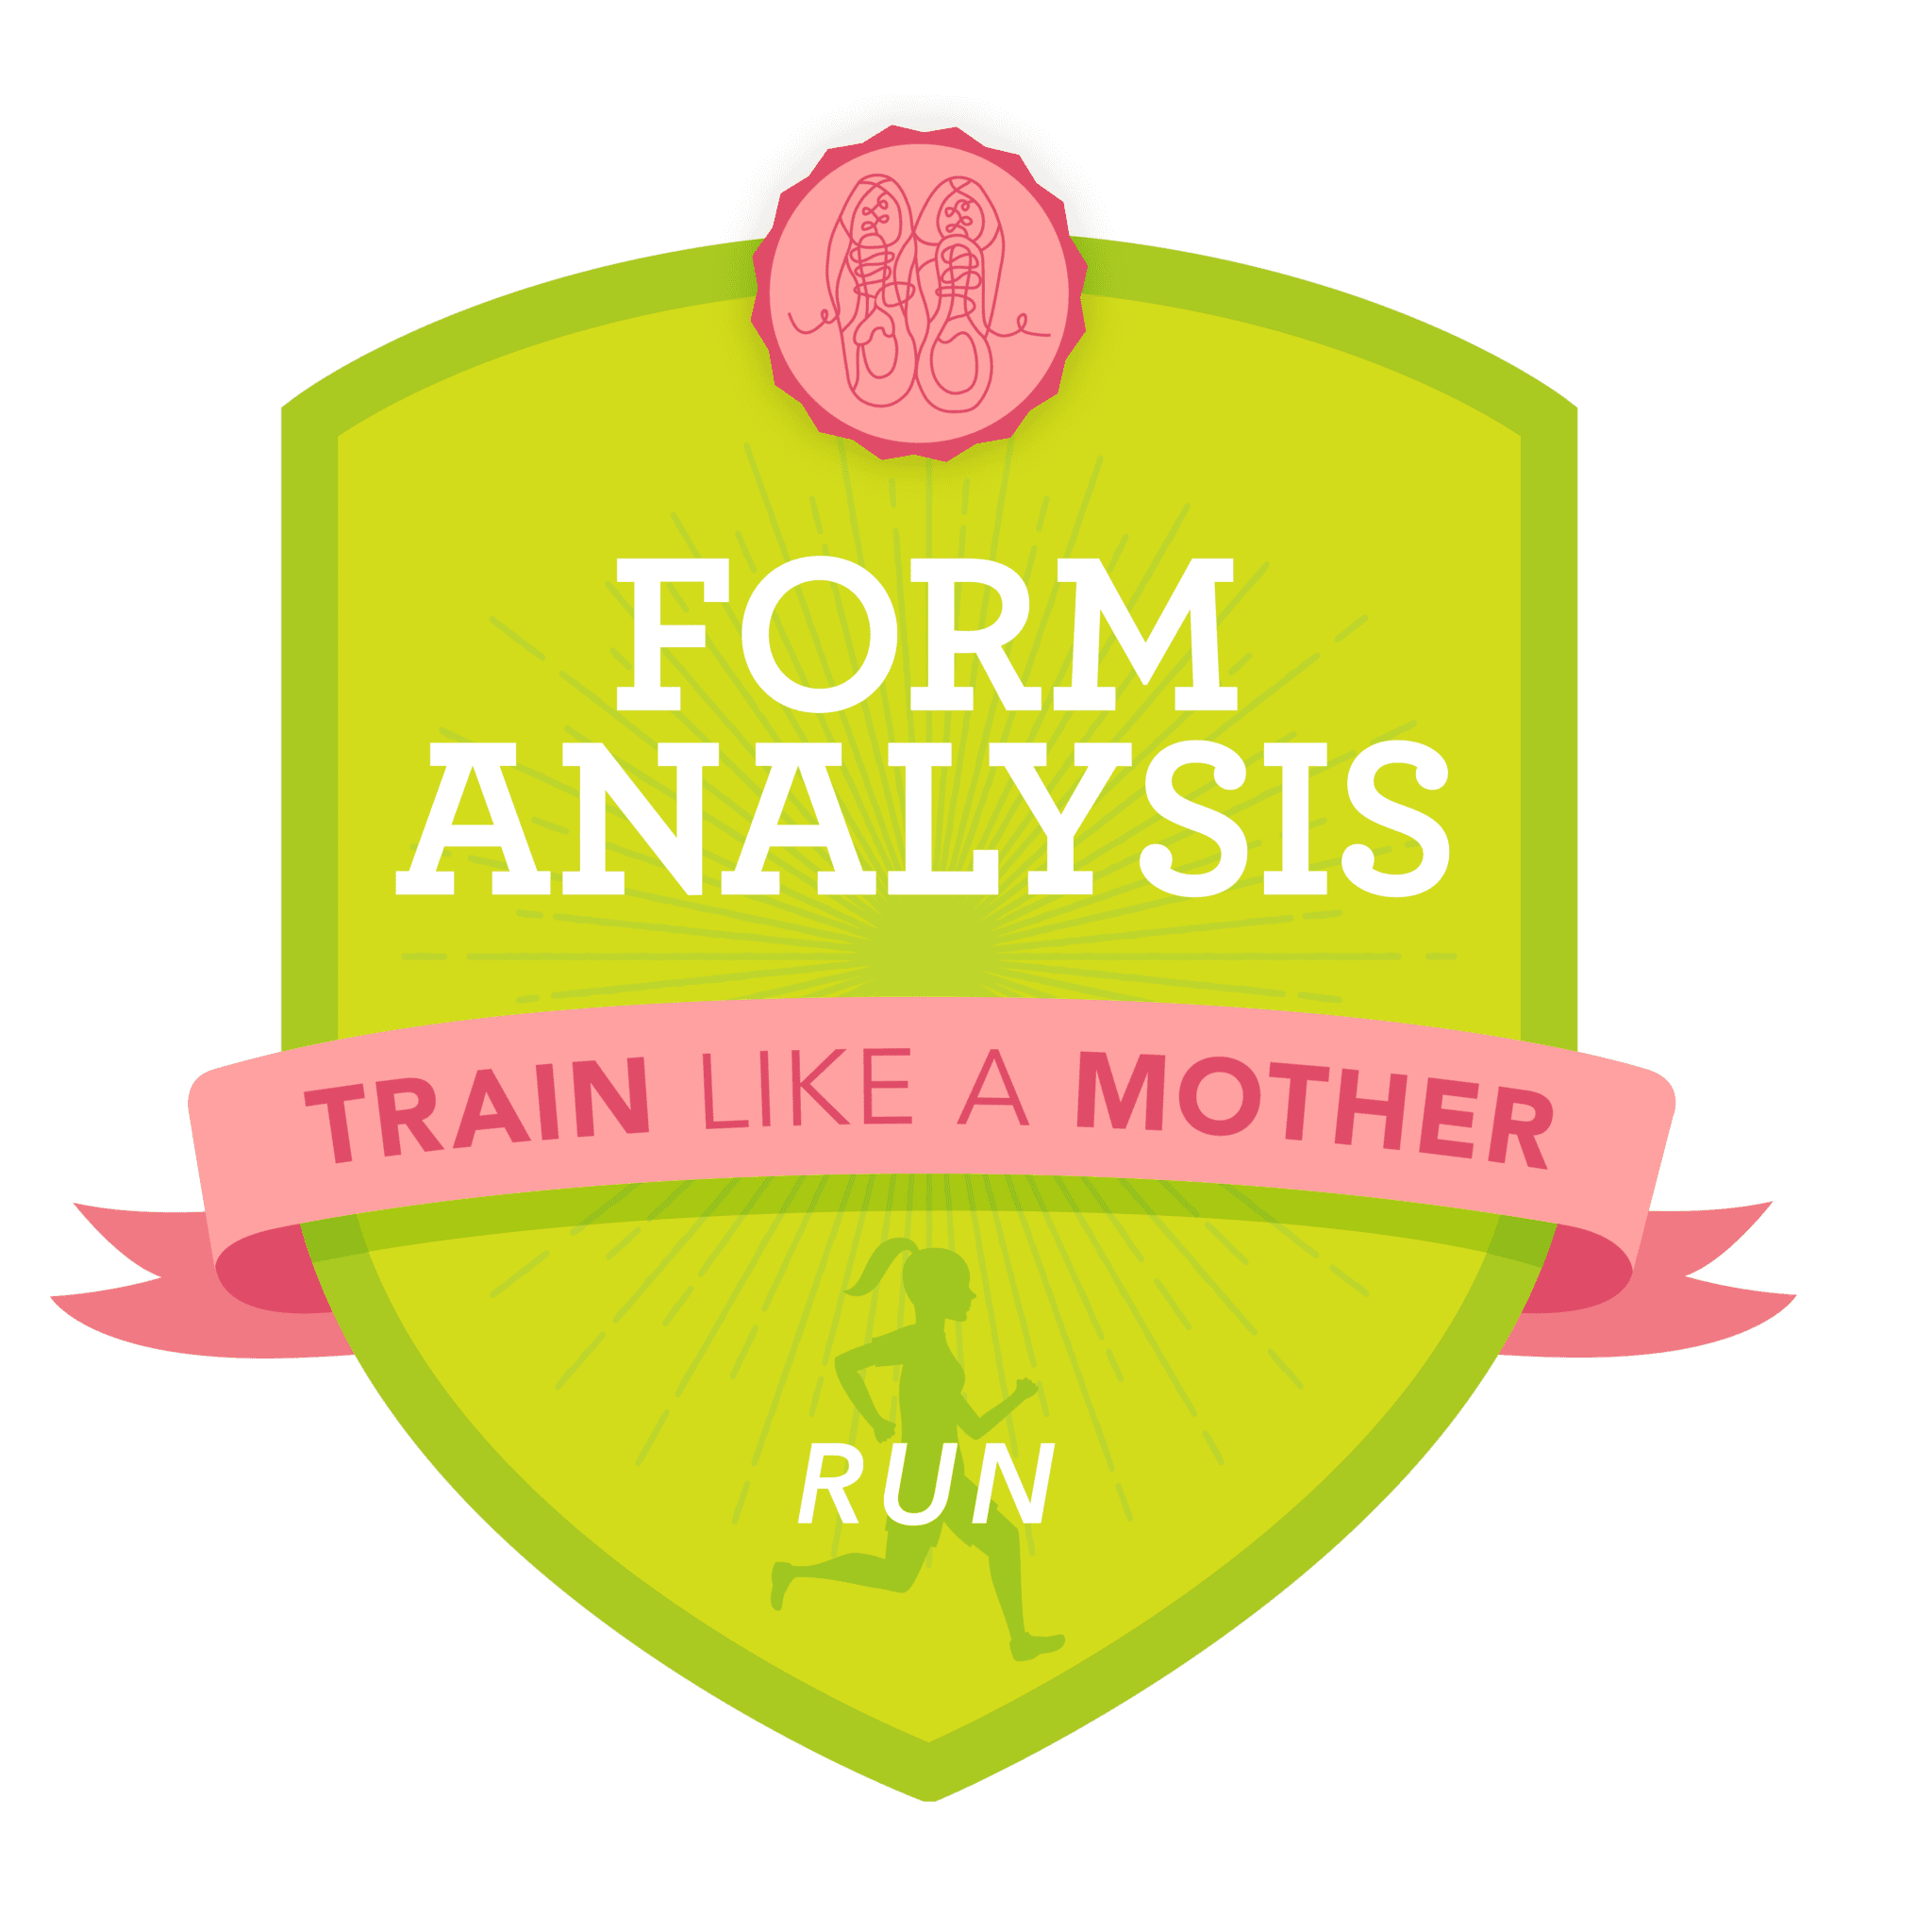 Form Analysis: Run